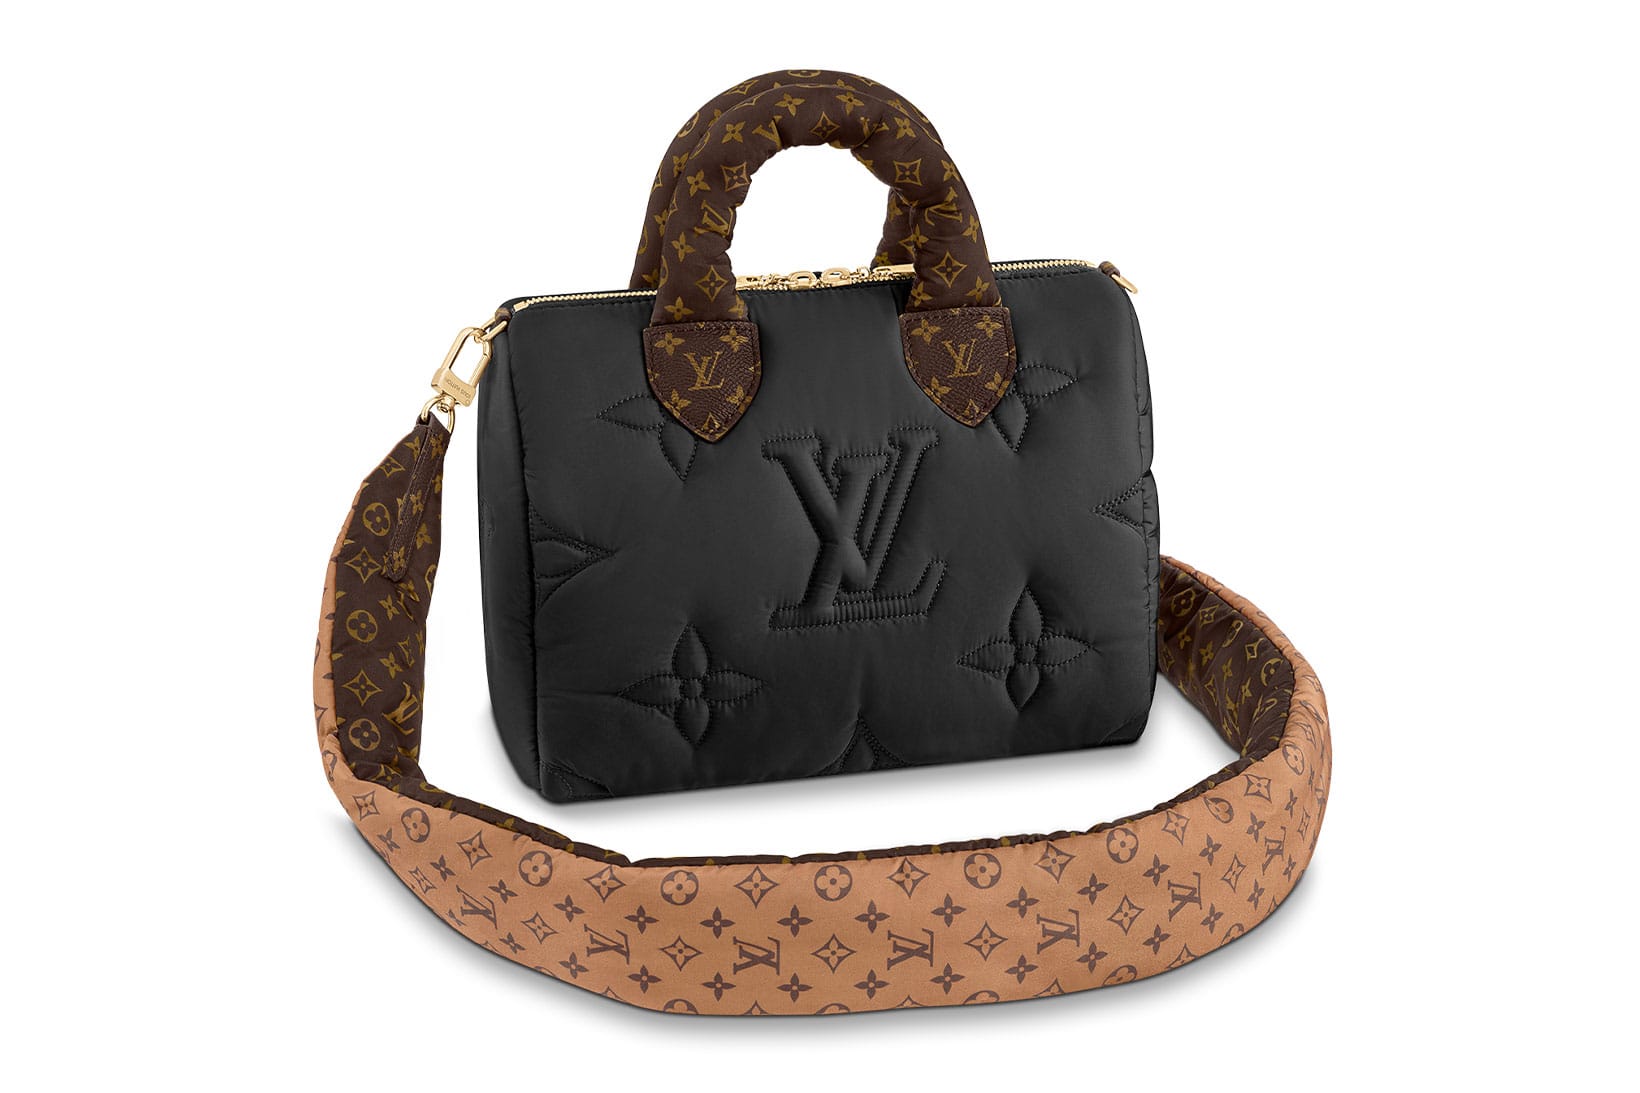 How to spot a fake Louis Vuitton bag  YouTube